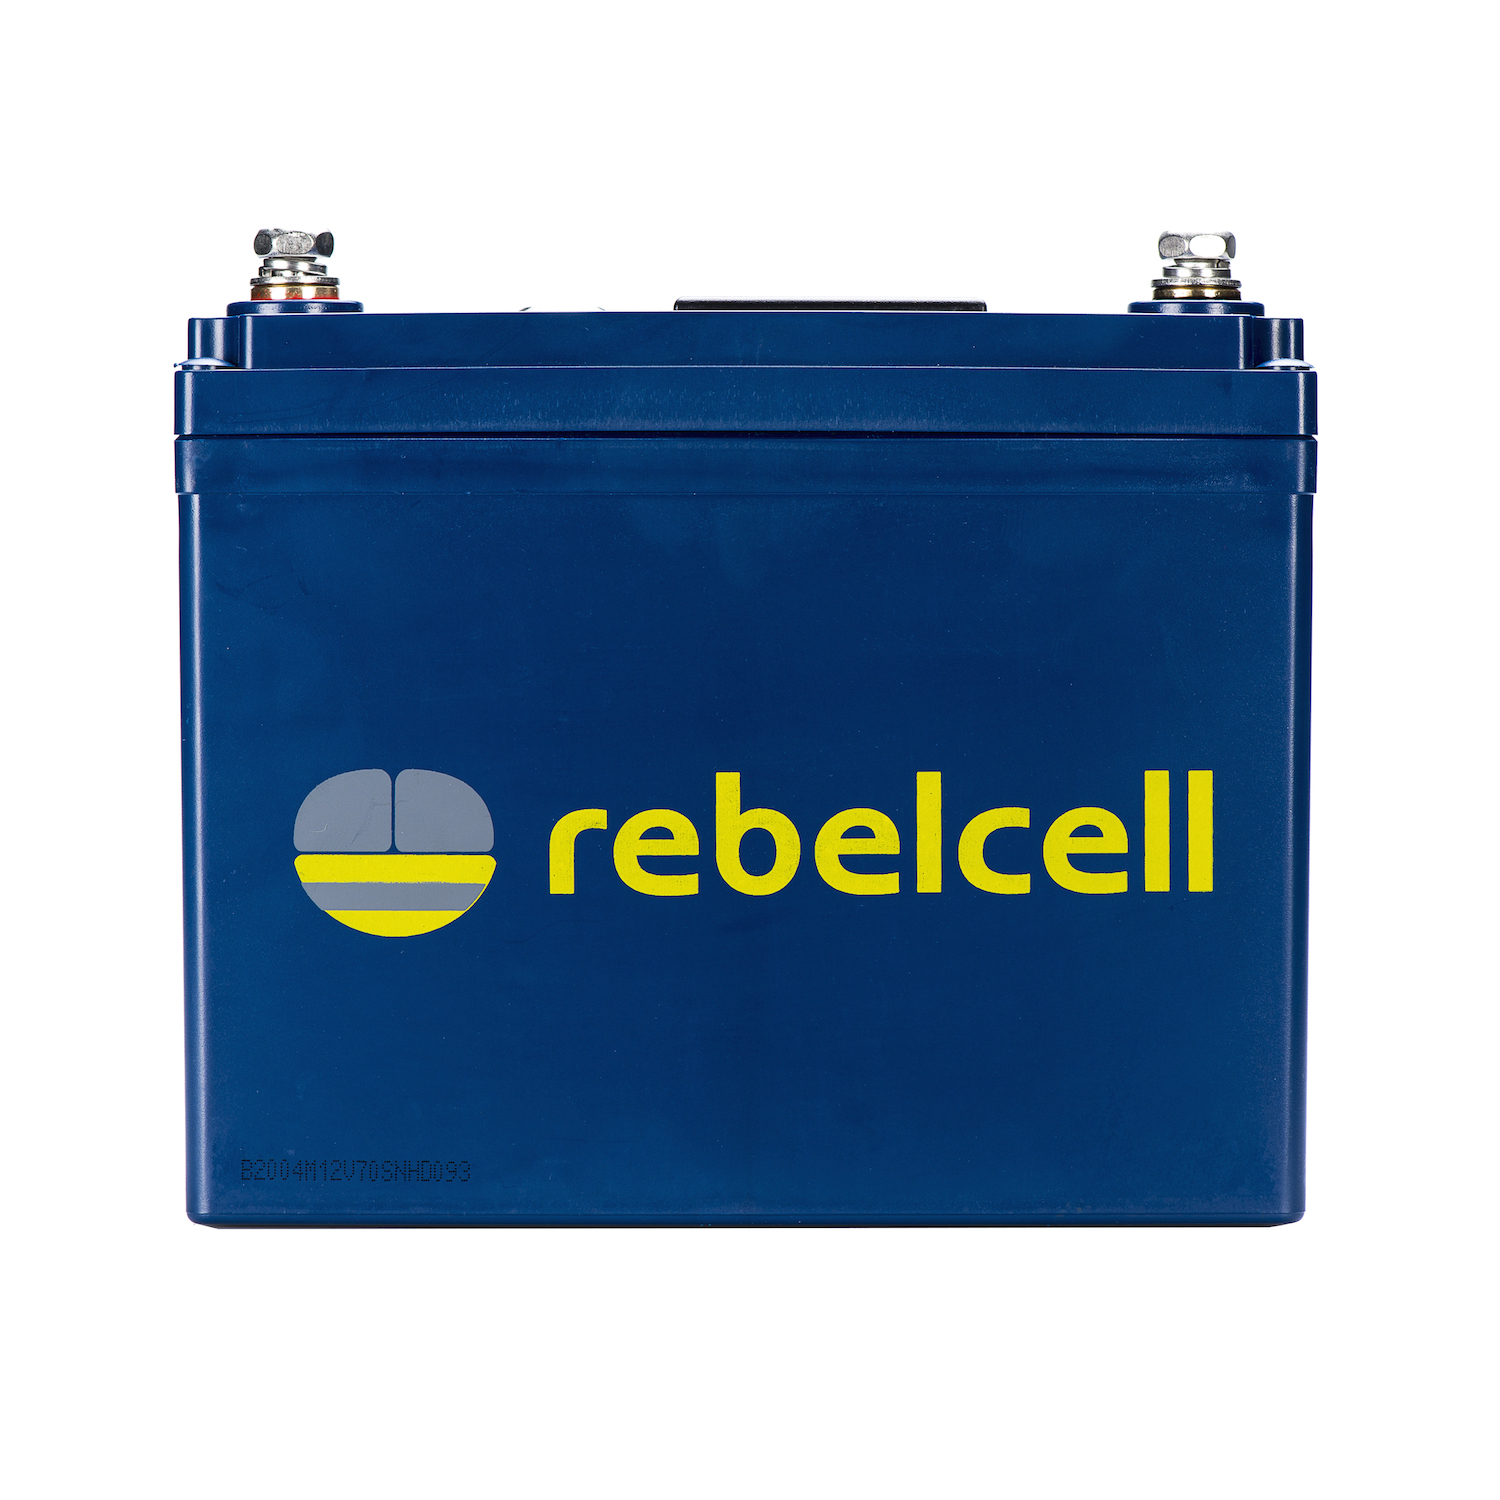 Justitie auditorium sticker 12 volt 50Ah Lithium accu | Rebelcell | Portable energie voor buiten